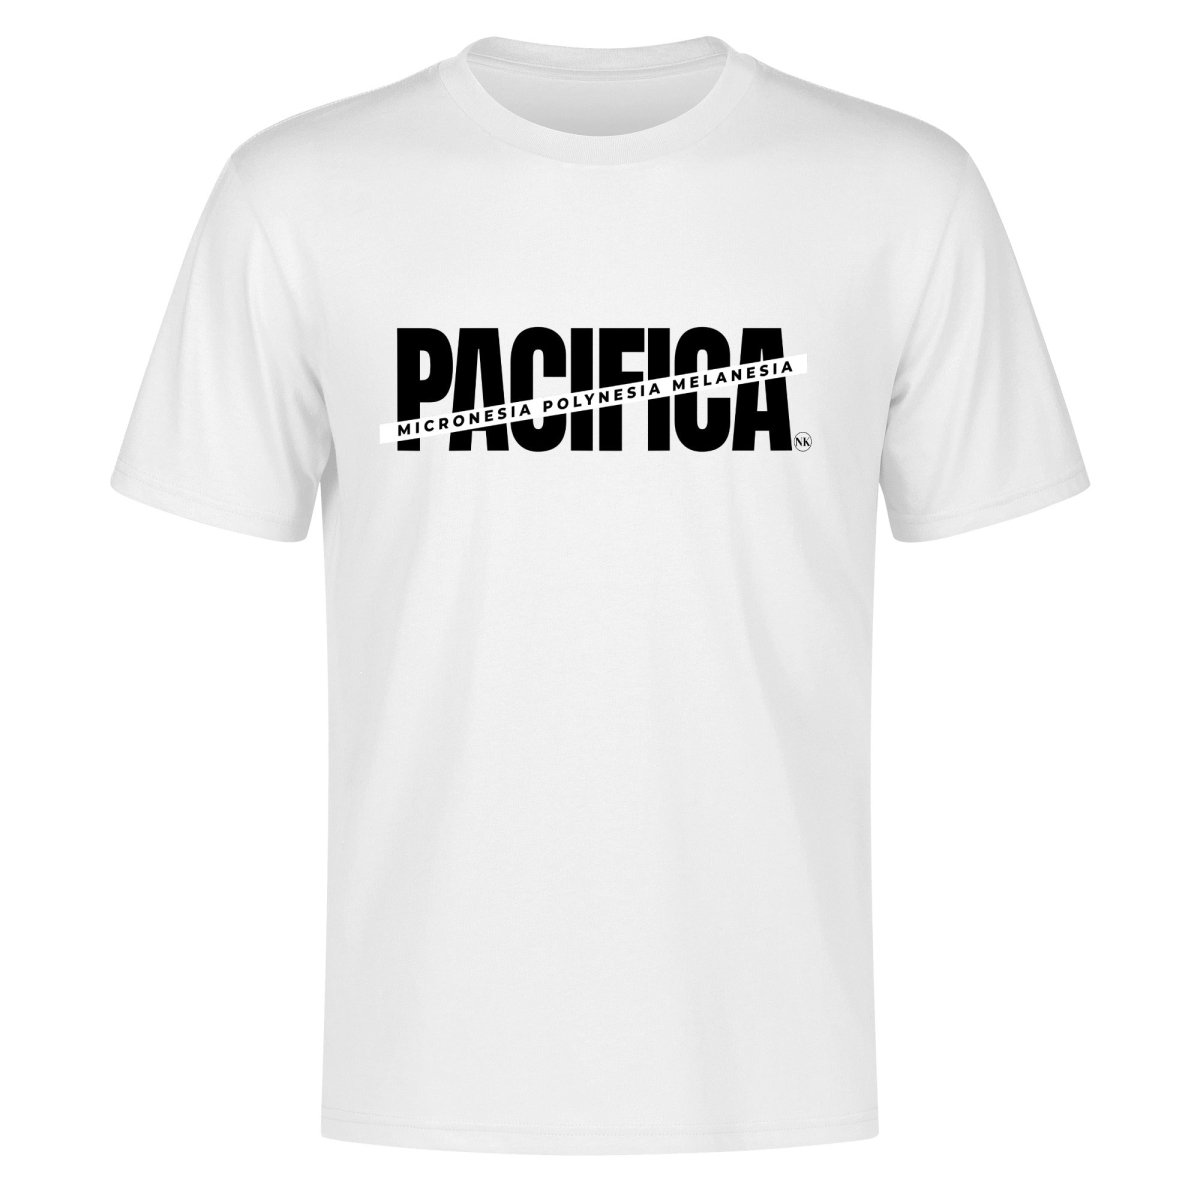 PACIFICA - Micronesia Polynesia Melanesia T-Shirt - Nesian Kulture